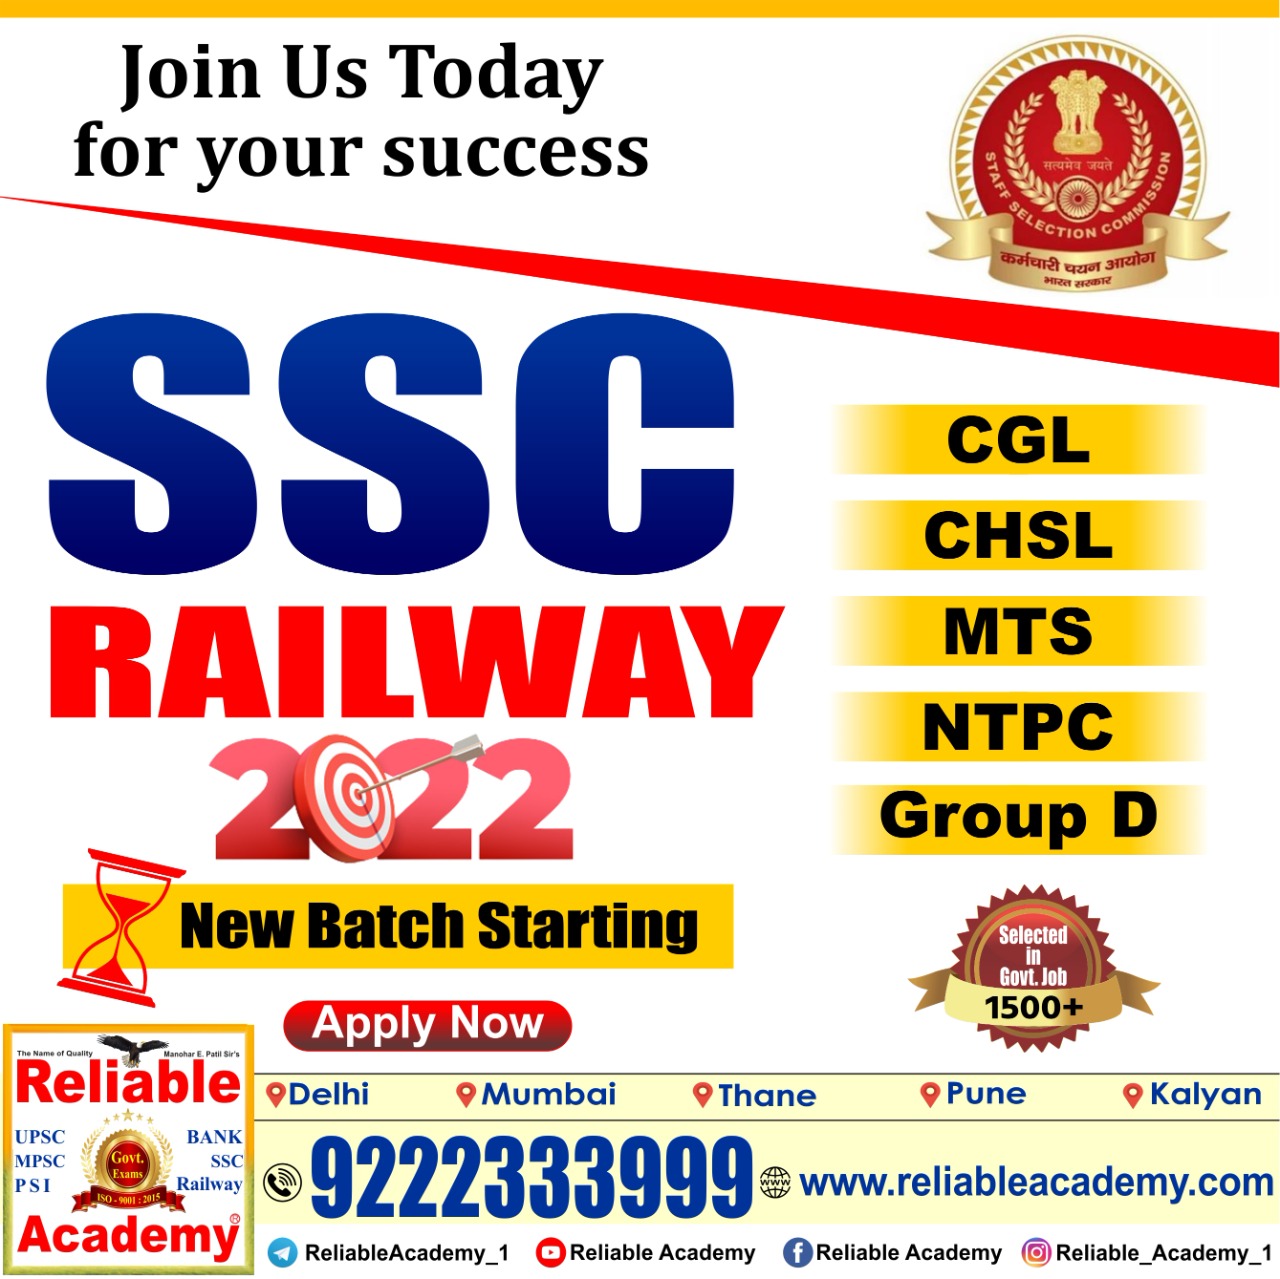 SSC Classes in Kalyan